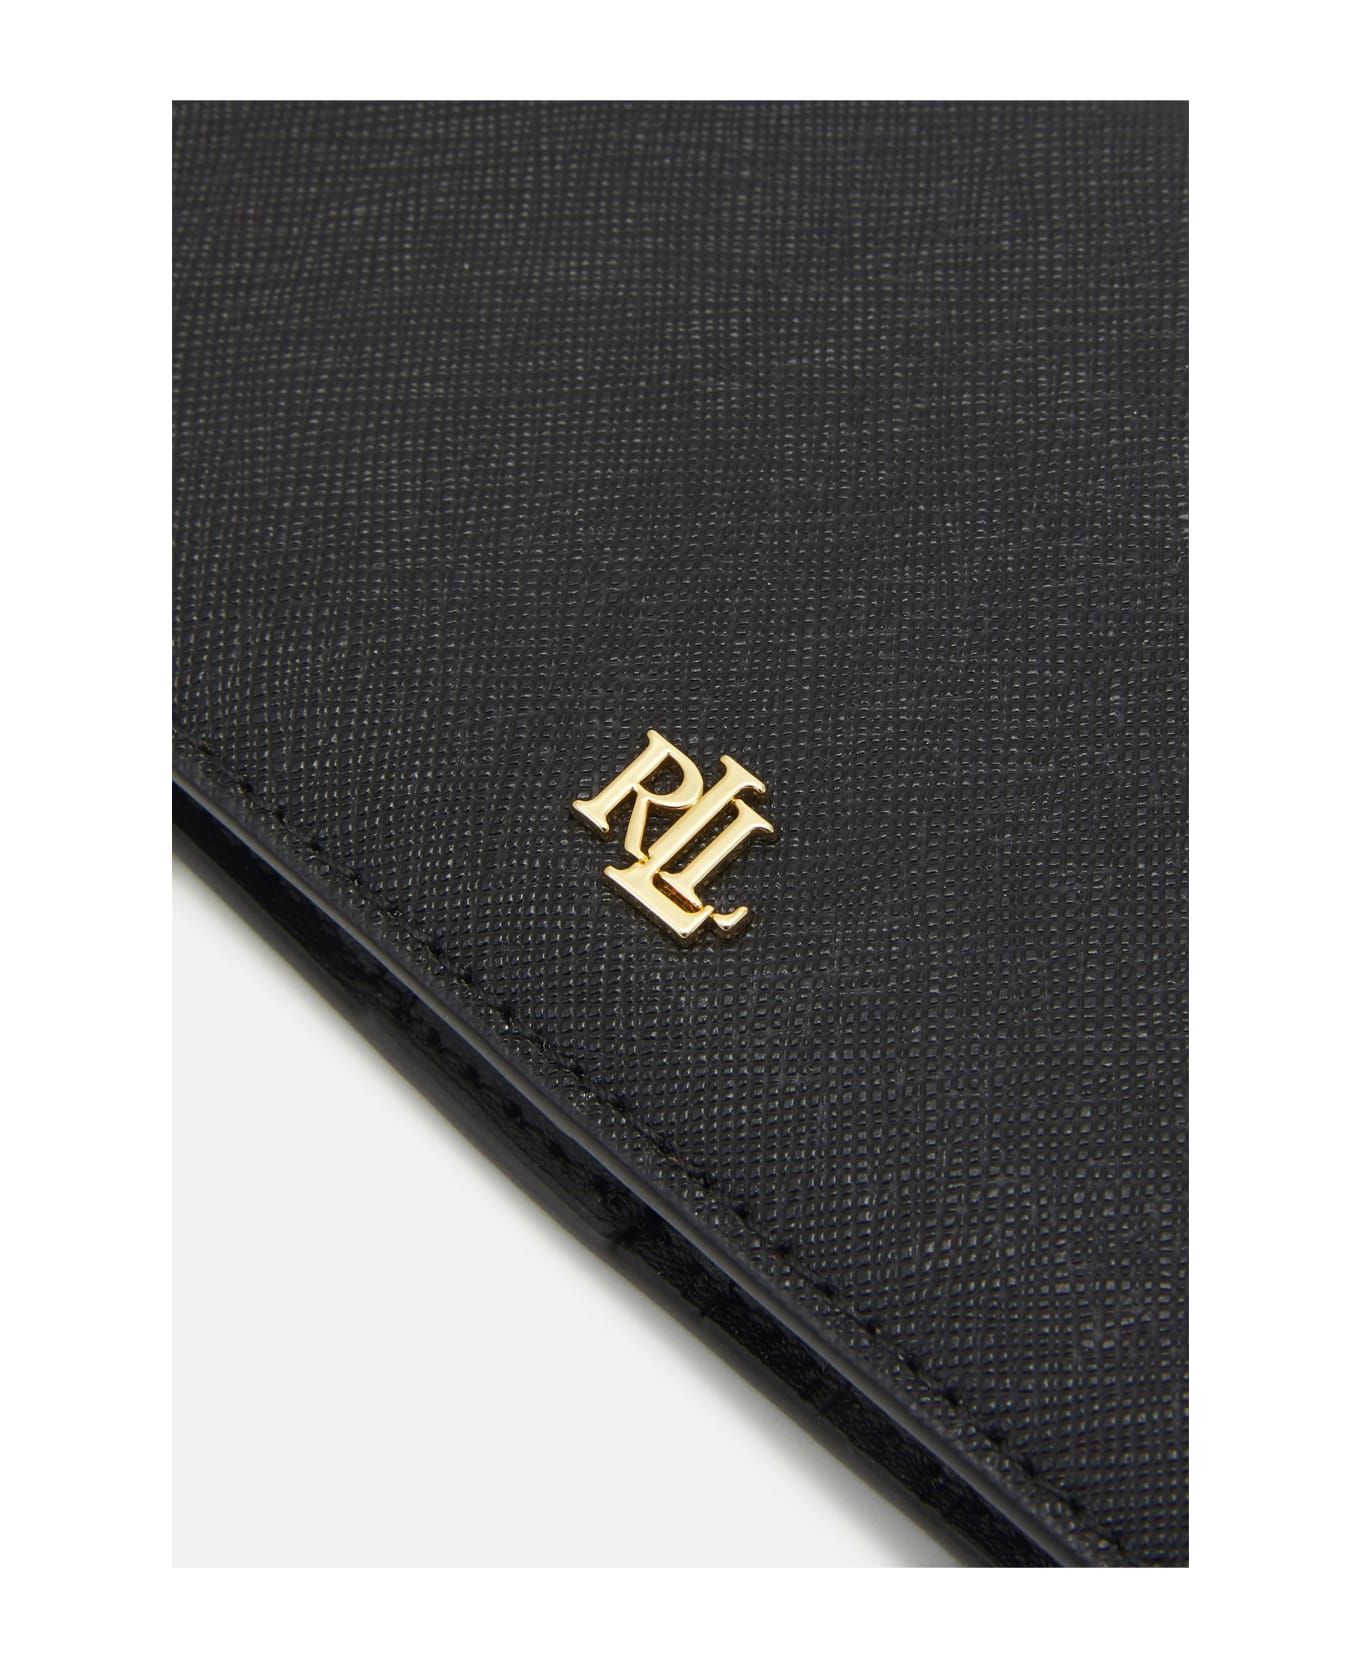 Polo Ralph Lauren Slim Wallet Wallet Medium - Black